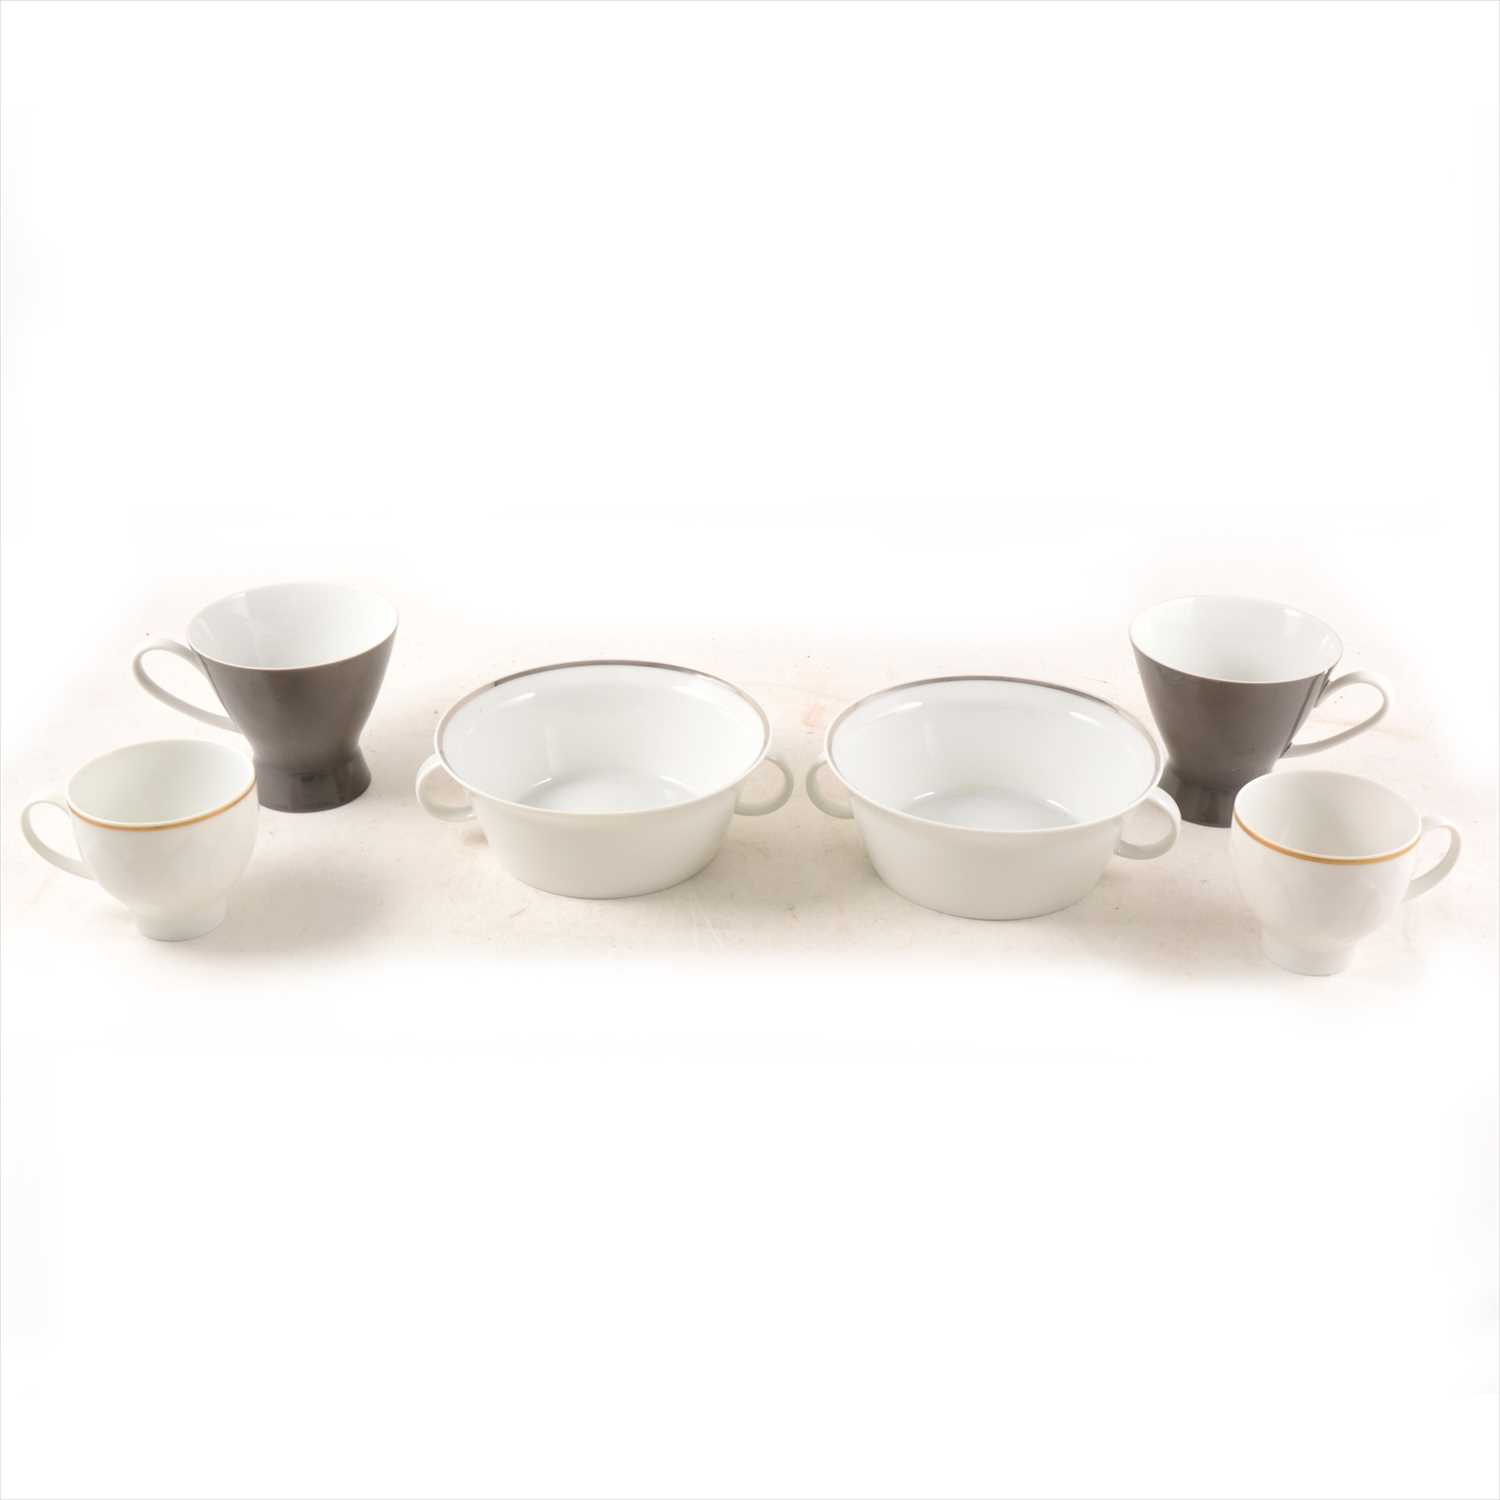 Lot 78 - A quantity of Rosenthal Studio-line porcelain